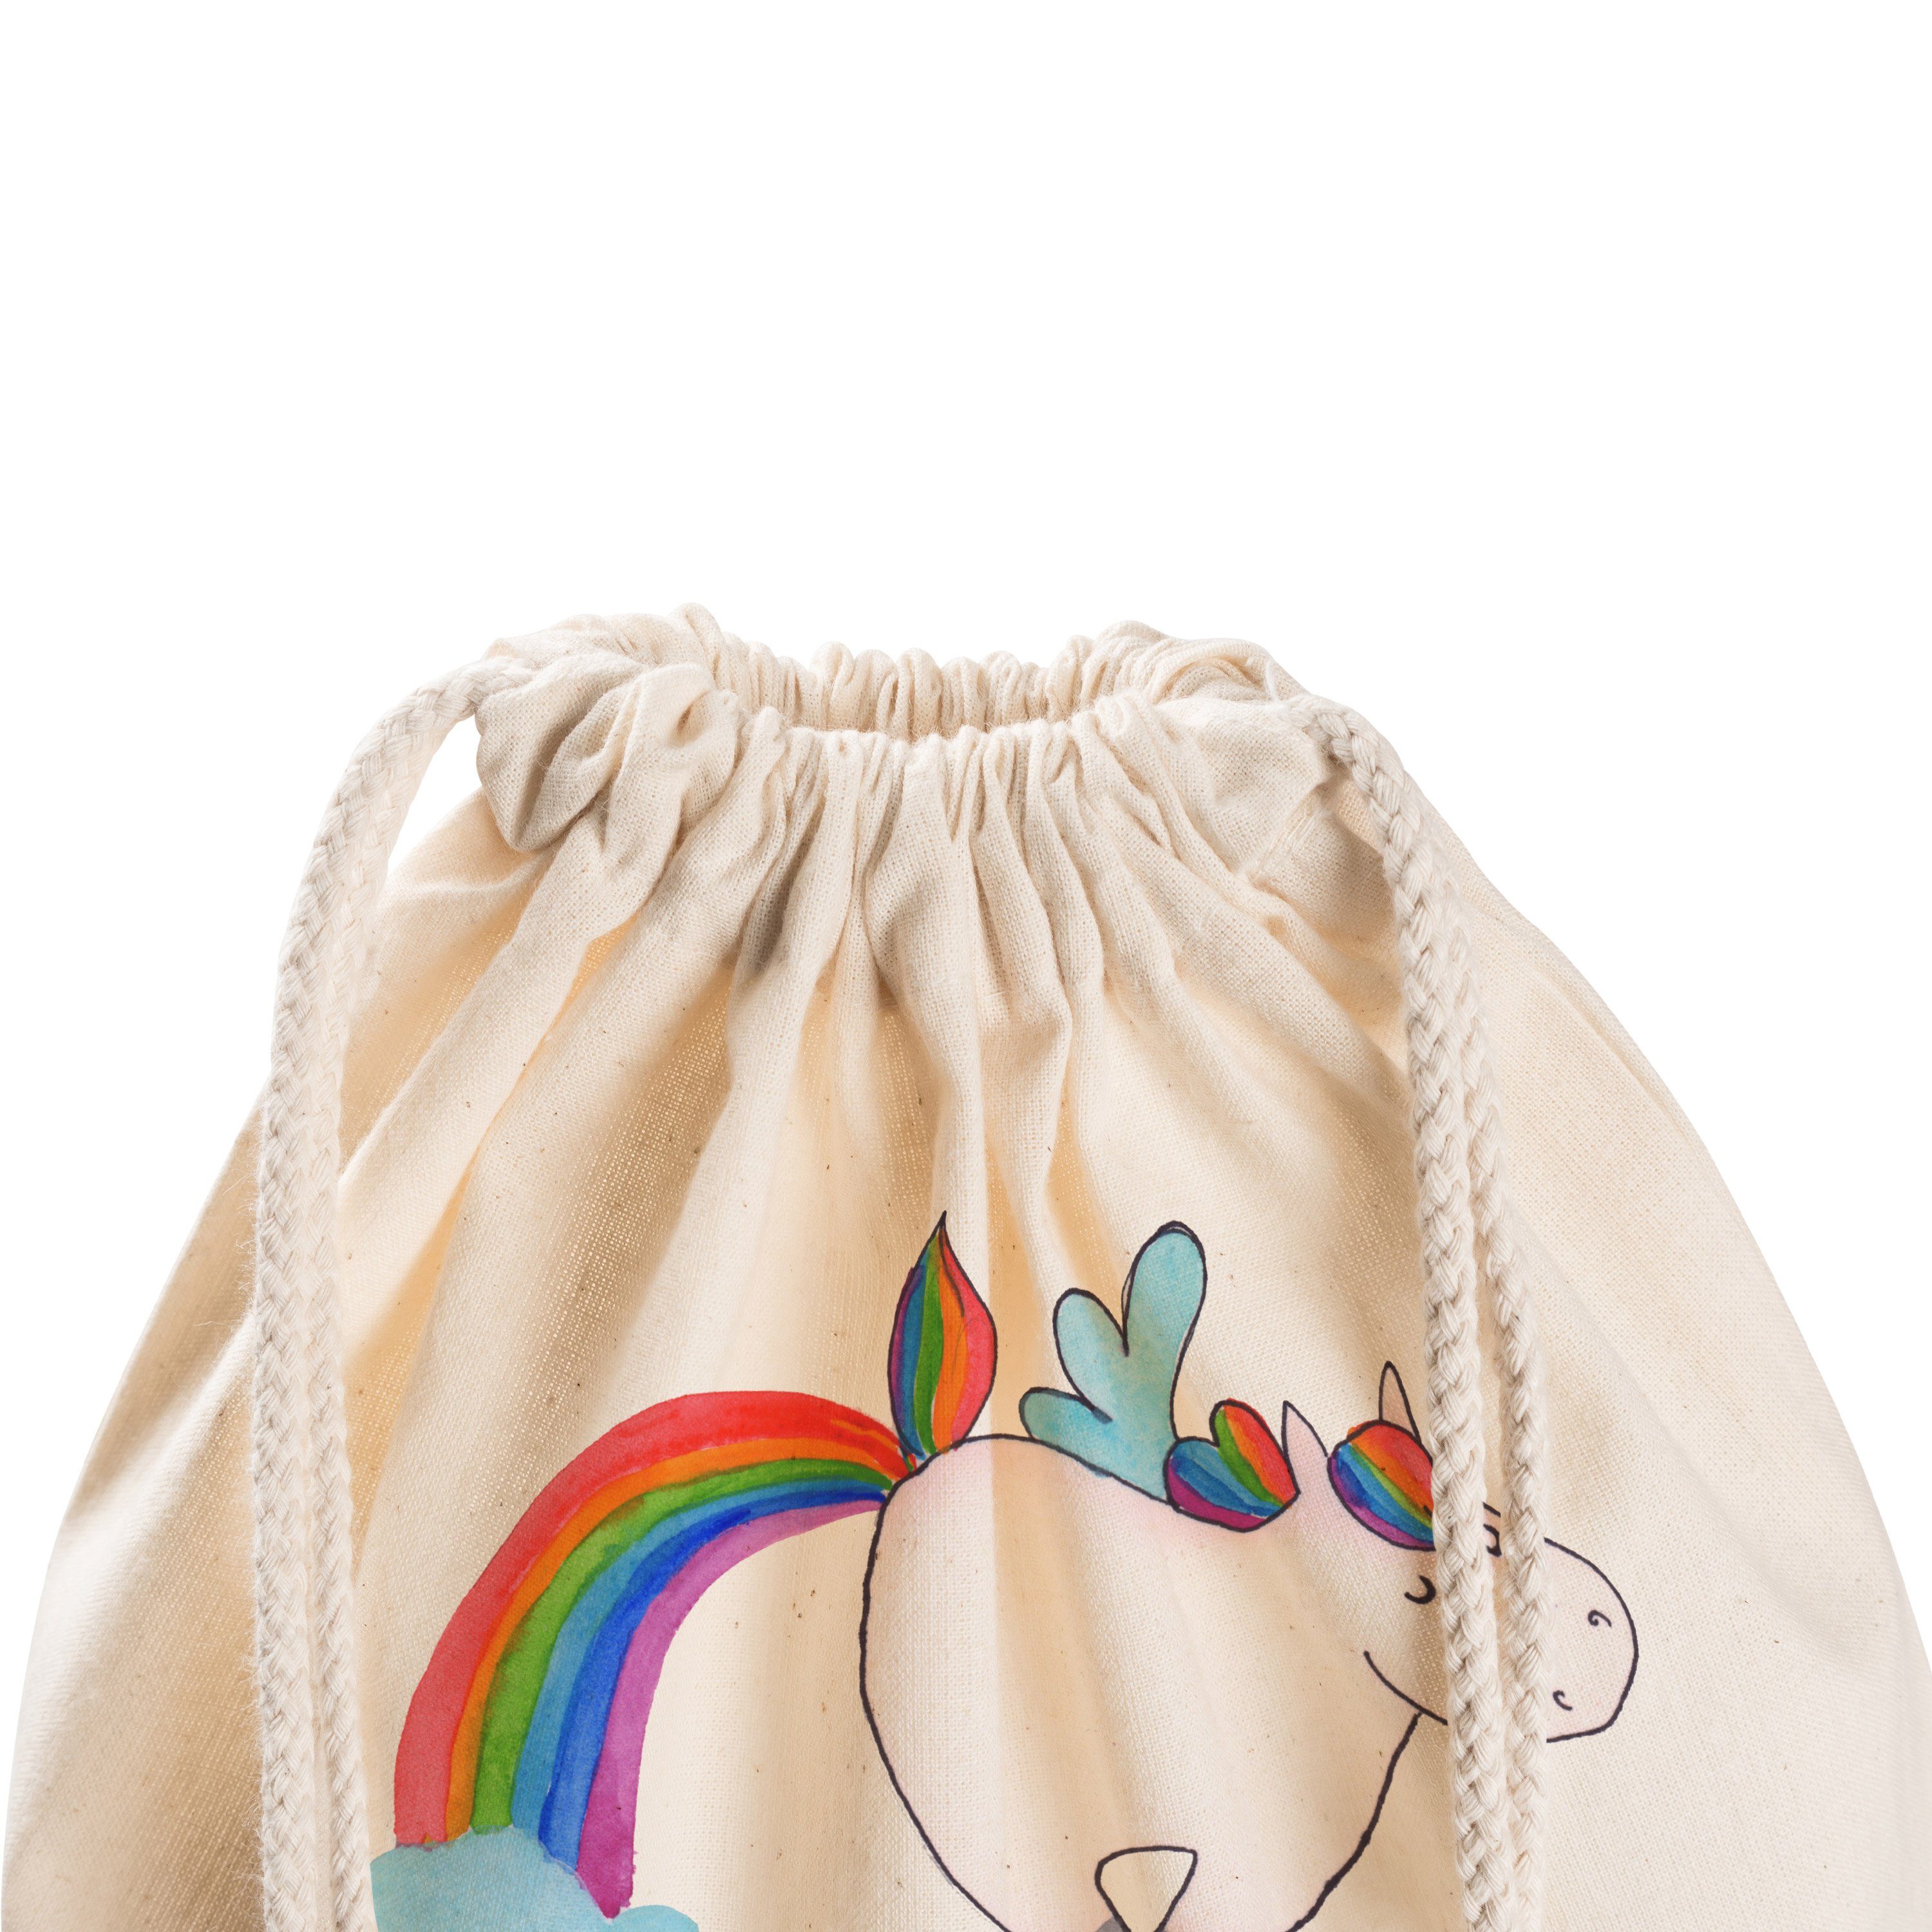 Geschenk, Mrs. - Sp Pegasus Transparent Sporttasche, (1-tlg) Mr. Regenbogen, Panda Sporttasche Einhorn & -